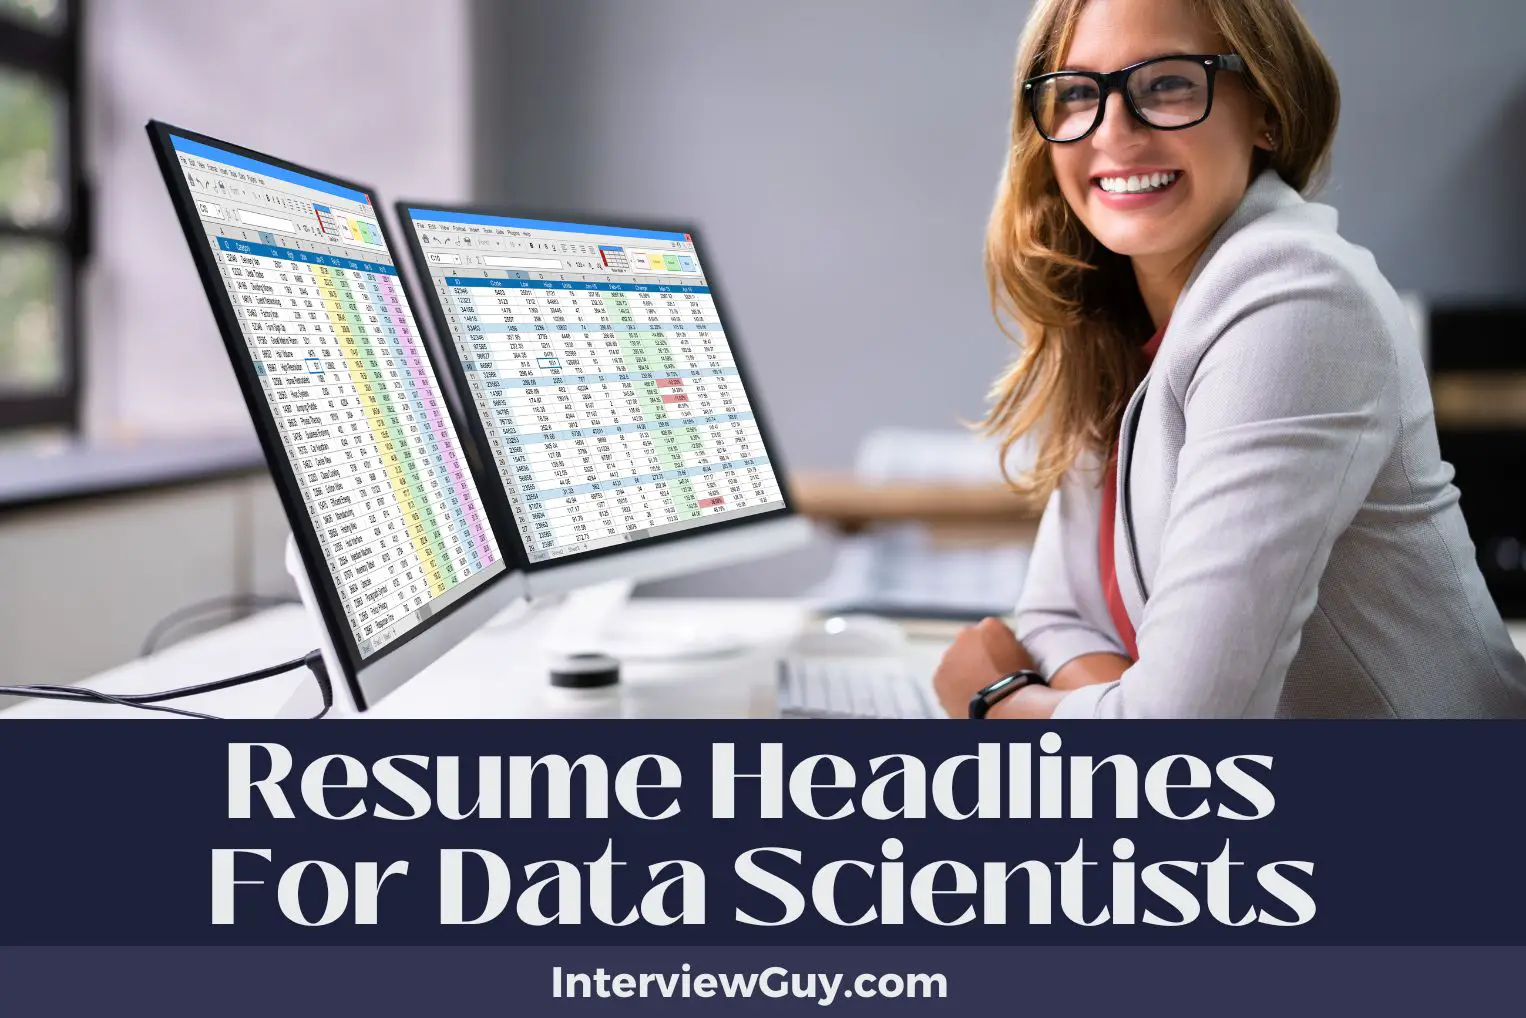 Resume Headlines For Data Scientists